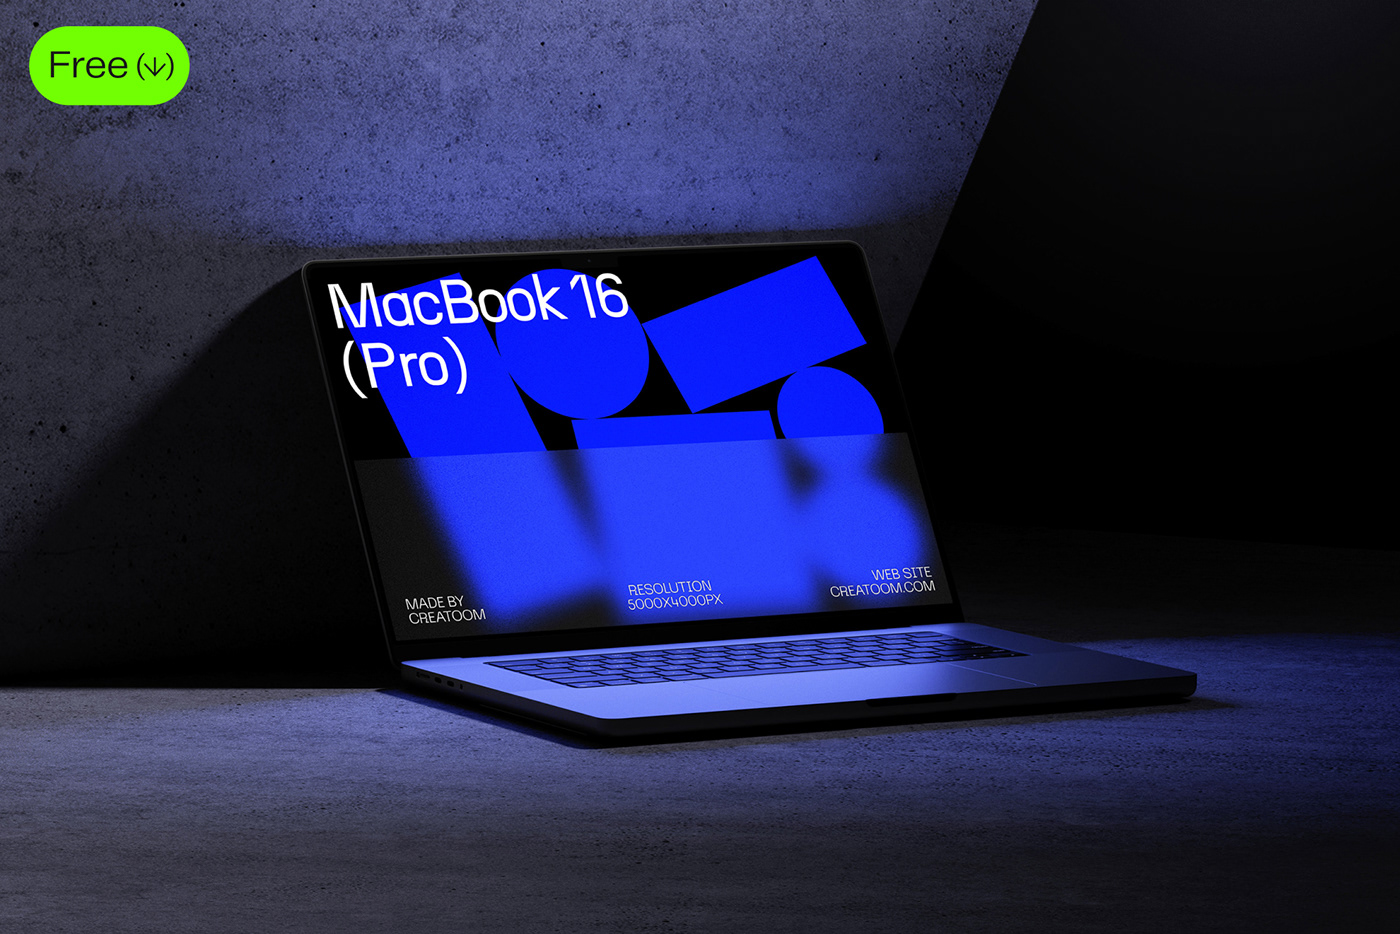 free macbook mockup free macbook free mockup  free download free psd download mockup freebie UI/UX free macbook 16 pro